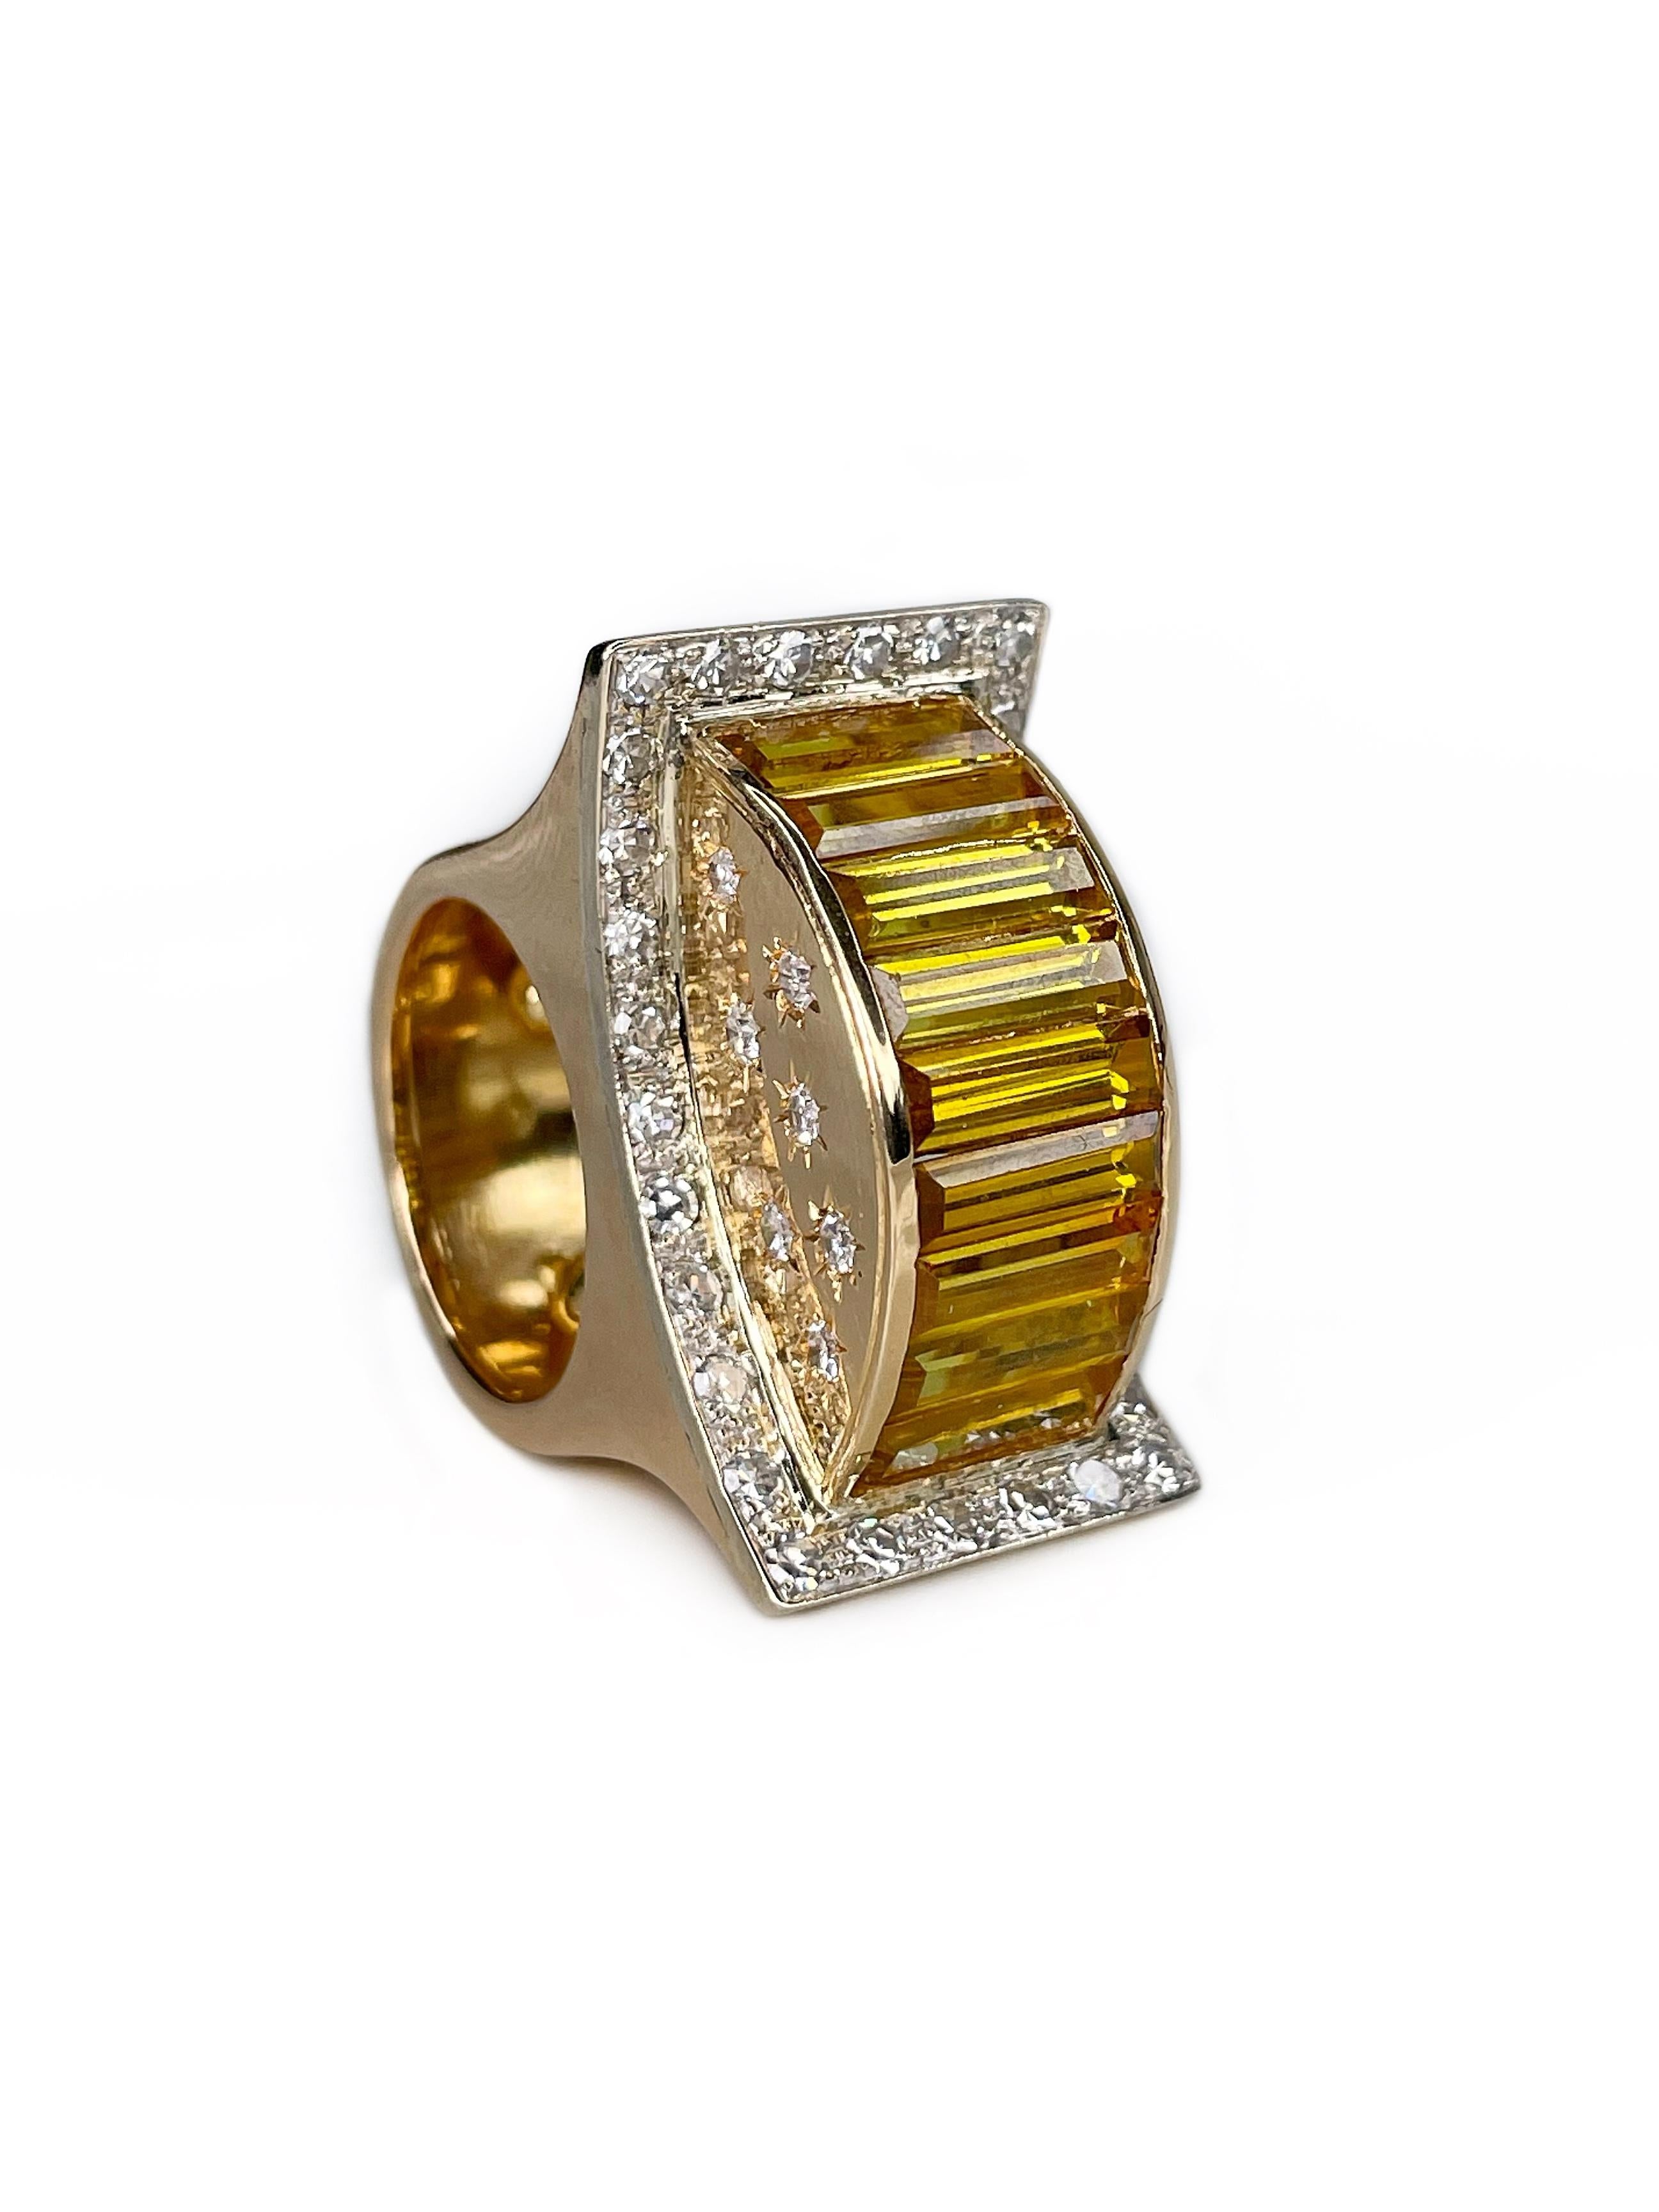 Art Deco 18 Karat Gold 6.0 Carat Yellow Sapphire 1.4 Carat Diamond Cocktail Ring 5